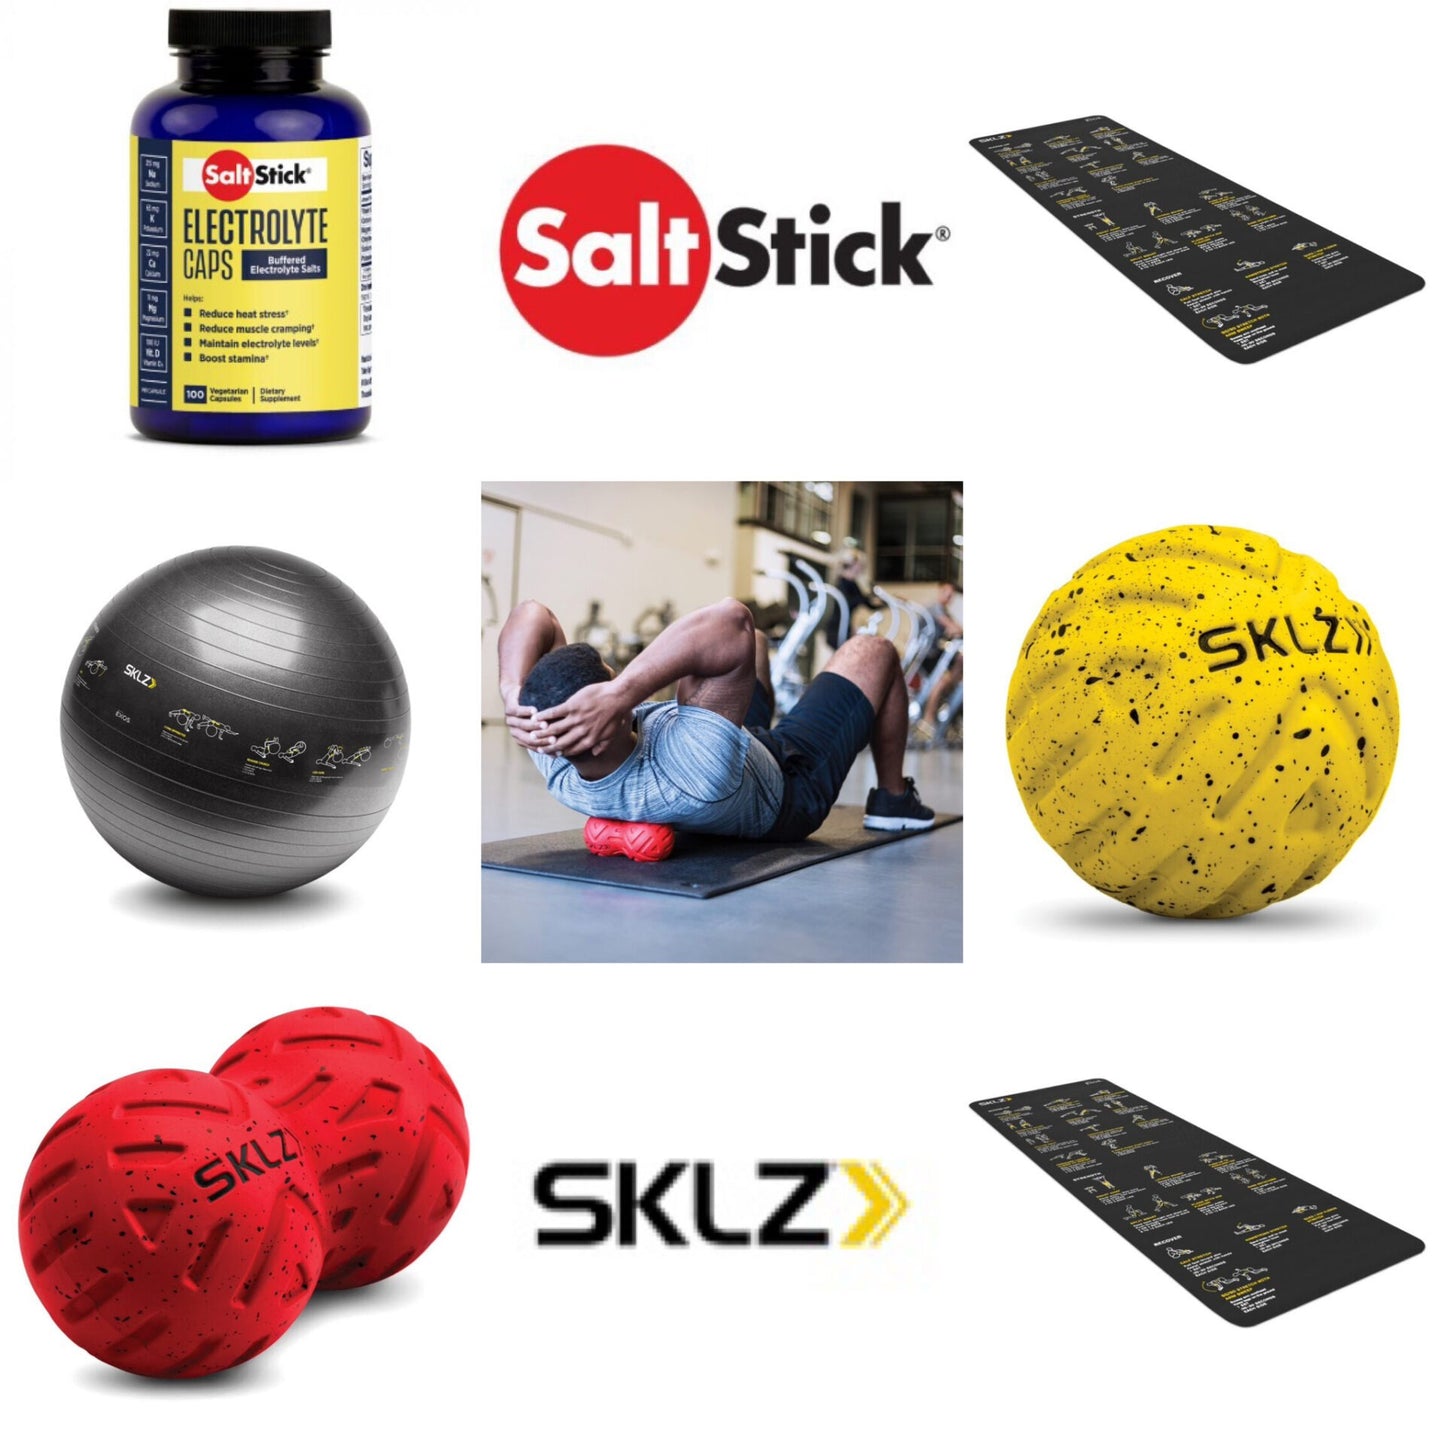 SKLZ SaltStick Home Training pakke